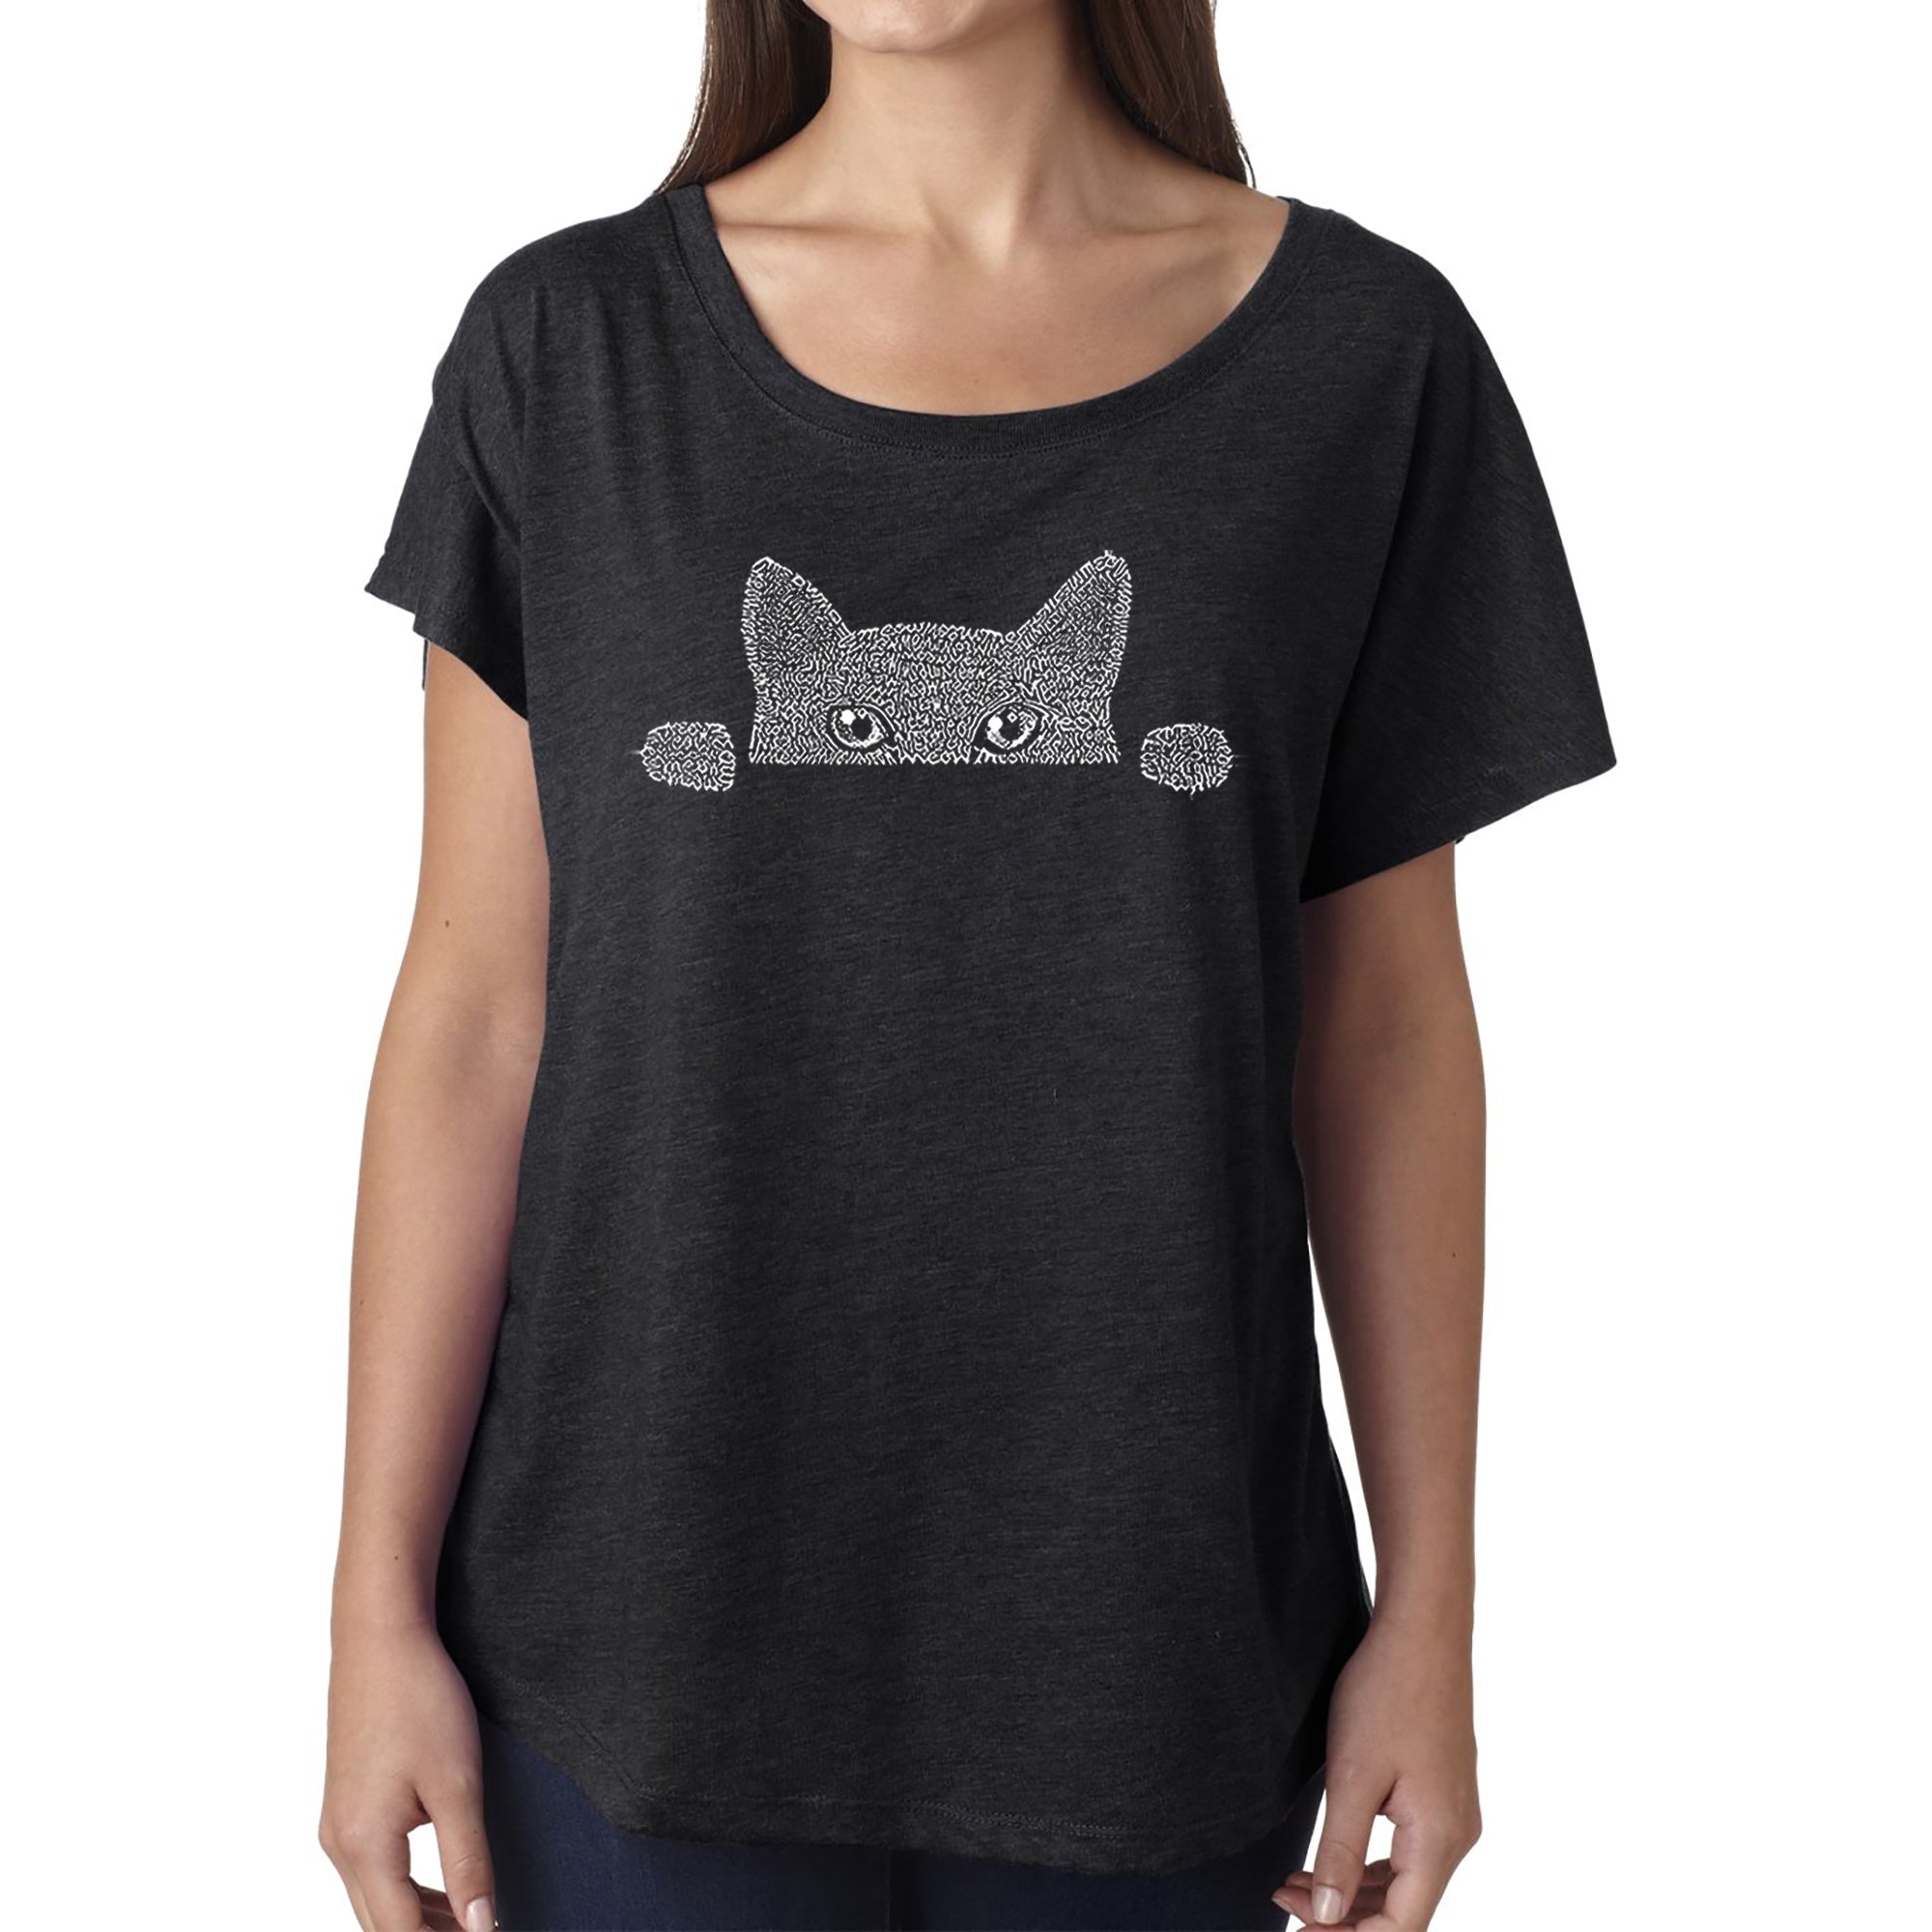 Peeking Cat - Women's Loose Fit Dolman Cut Word Art Shirt - Black - Large